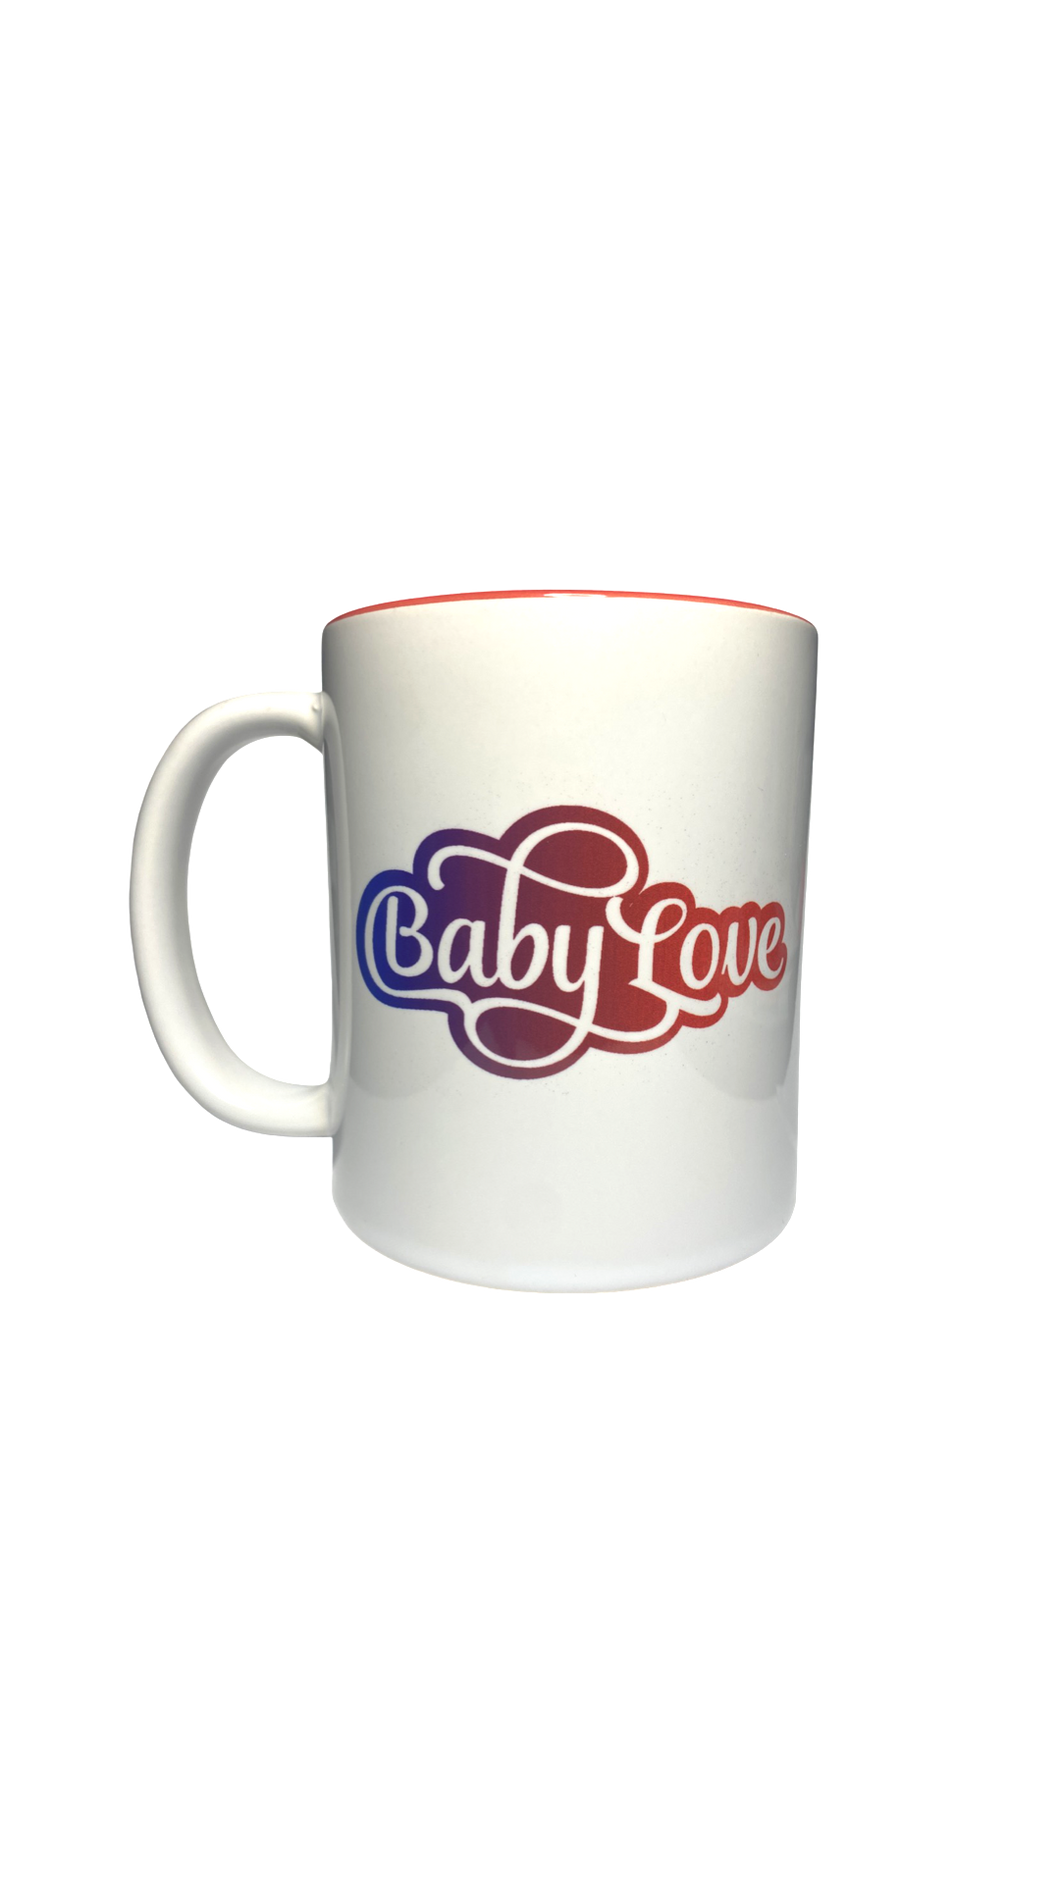 BabyLove Mug *limited